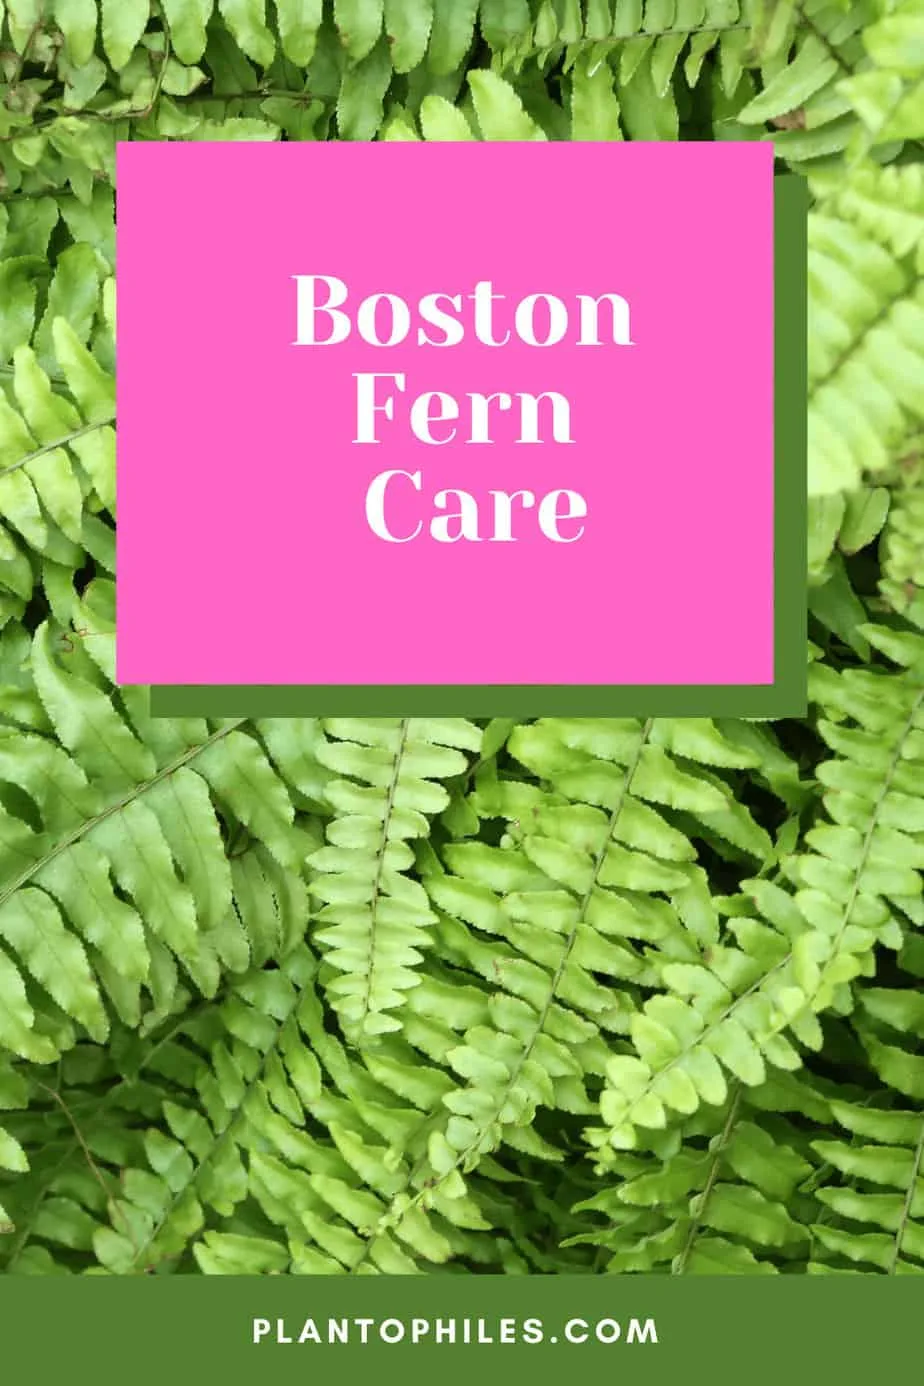 Boston fern Care